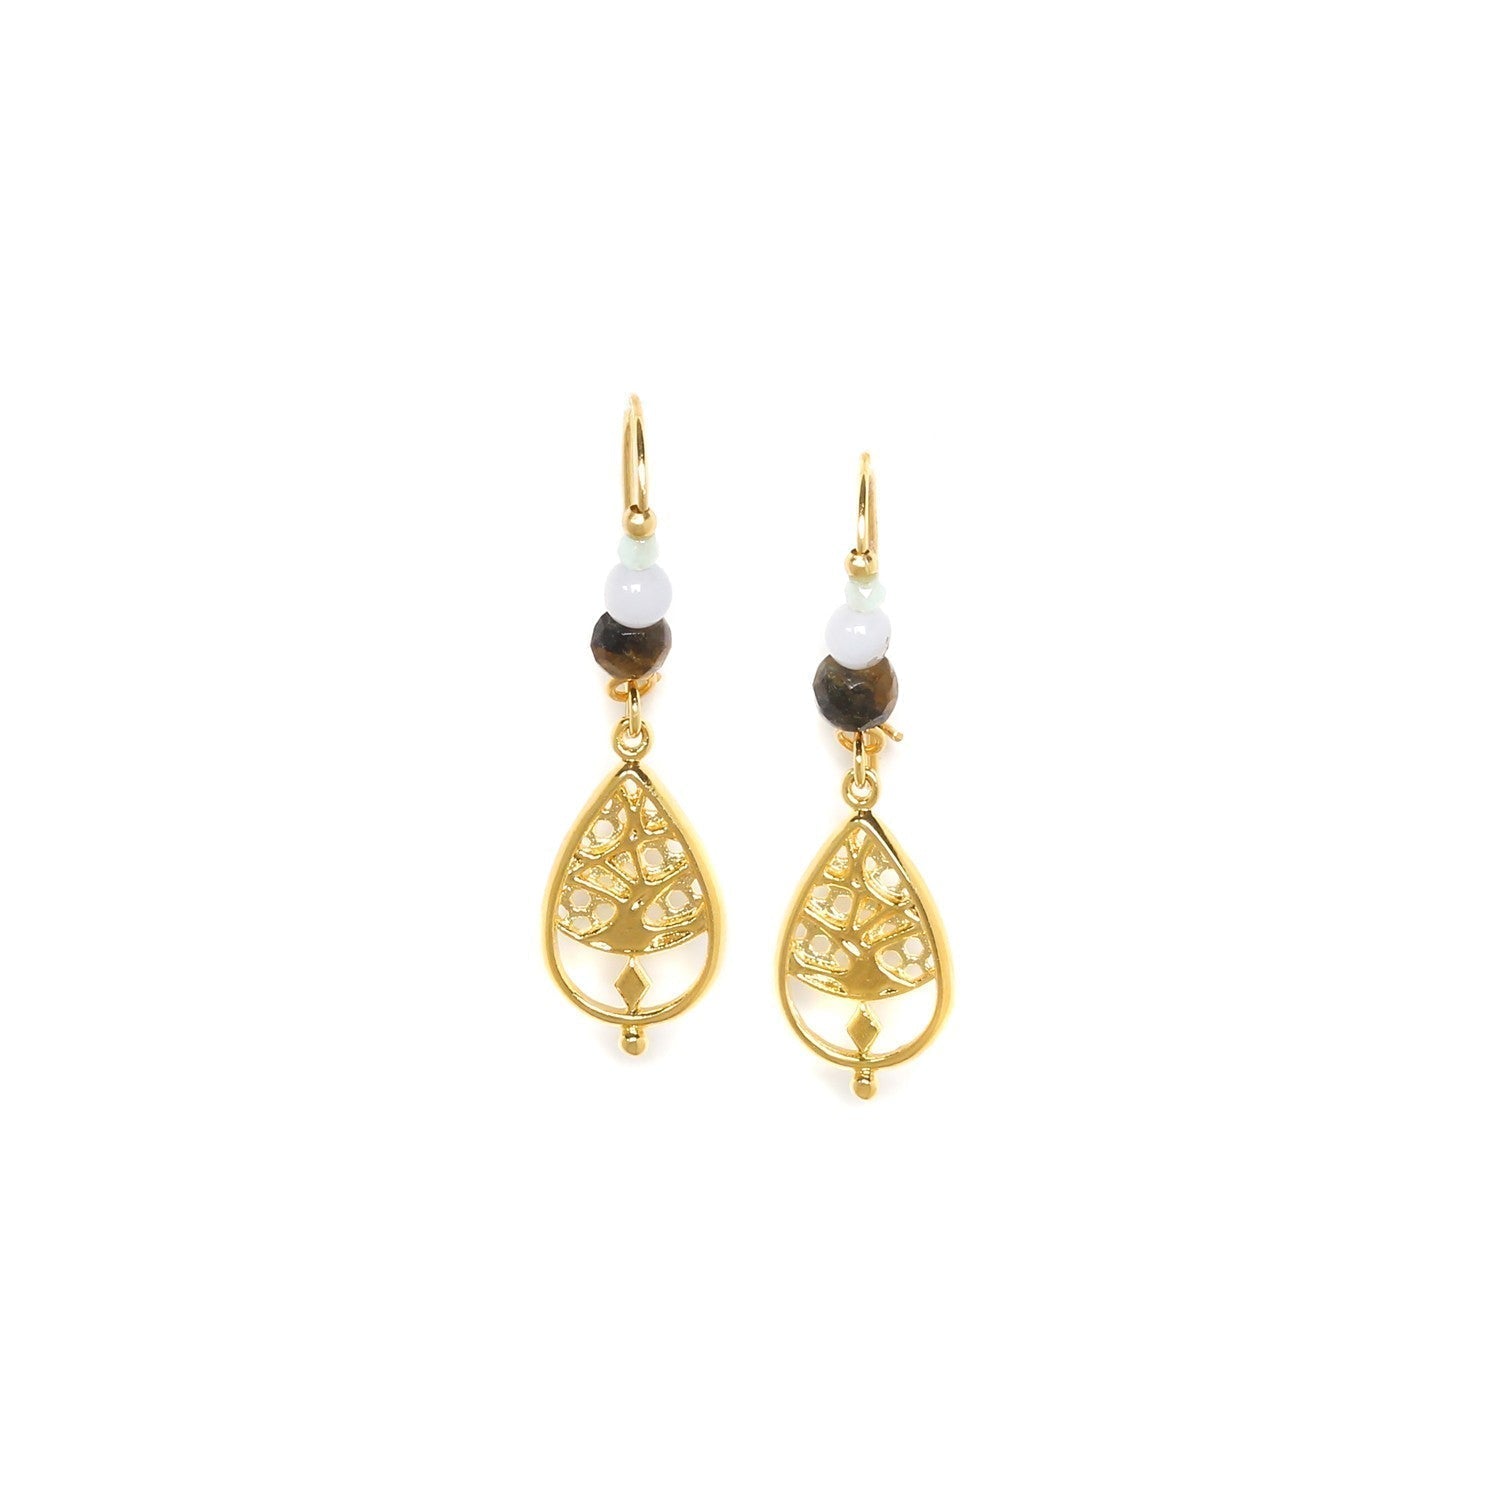 Barbara Drop Earrings - The Nancy Smillie Shop - Art, Jewellery & Designer Gifts Glasgow